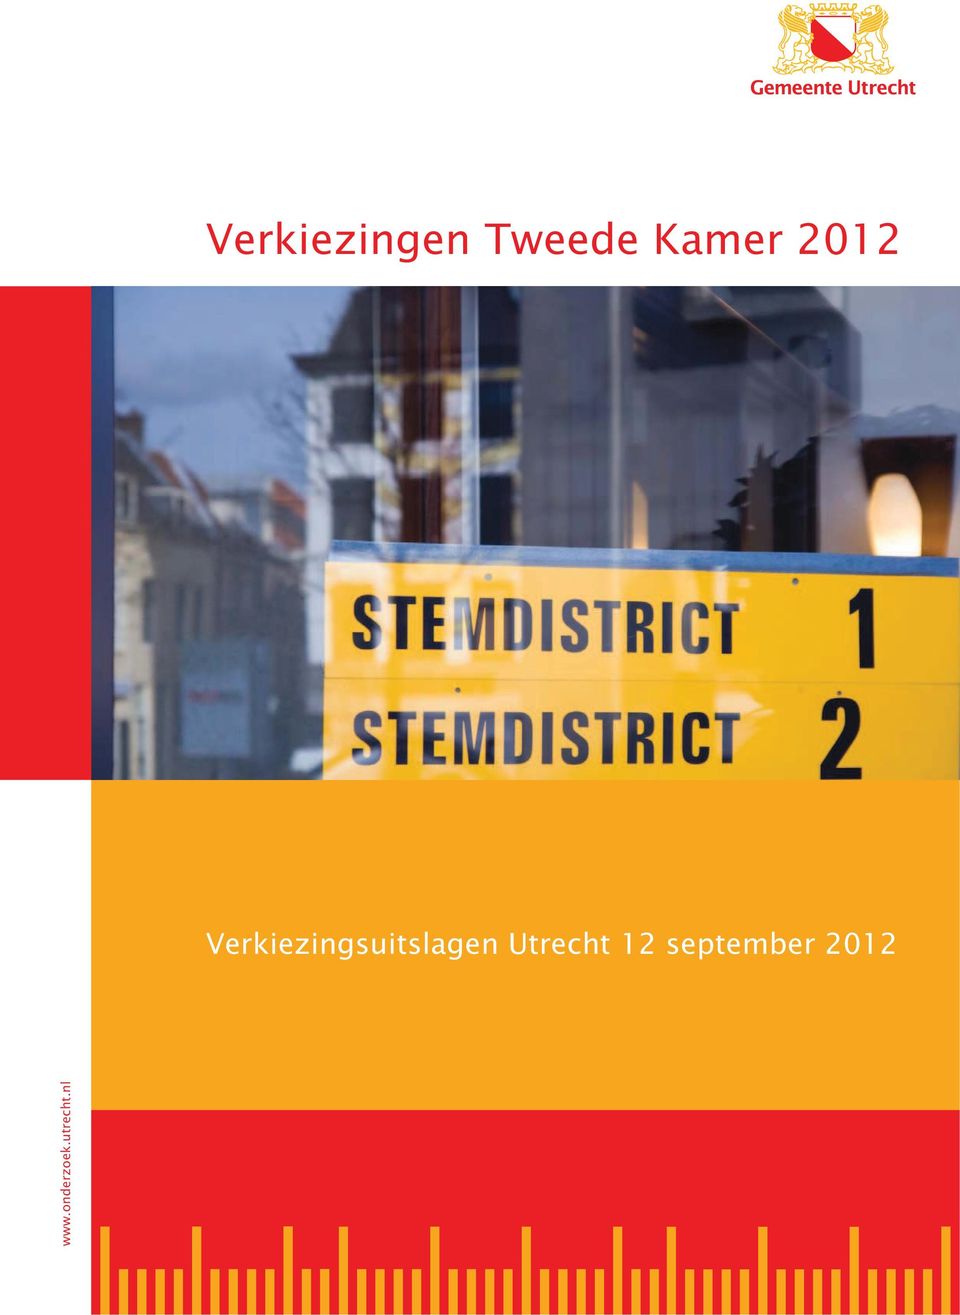 Utrecht 12 september 2012